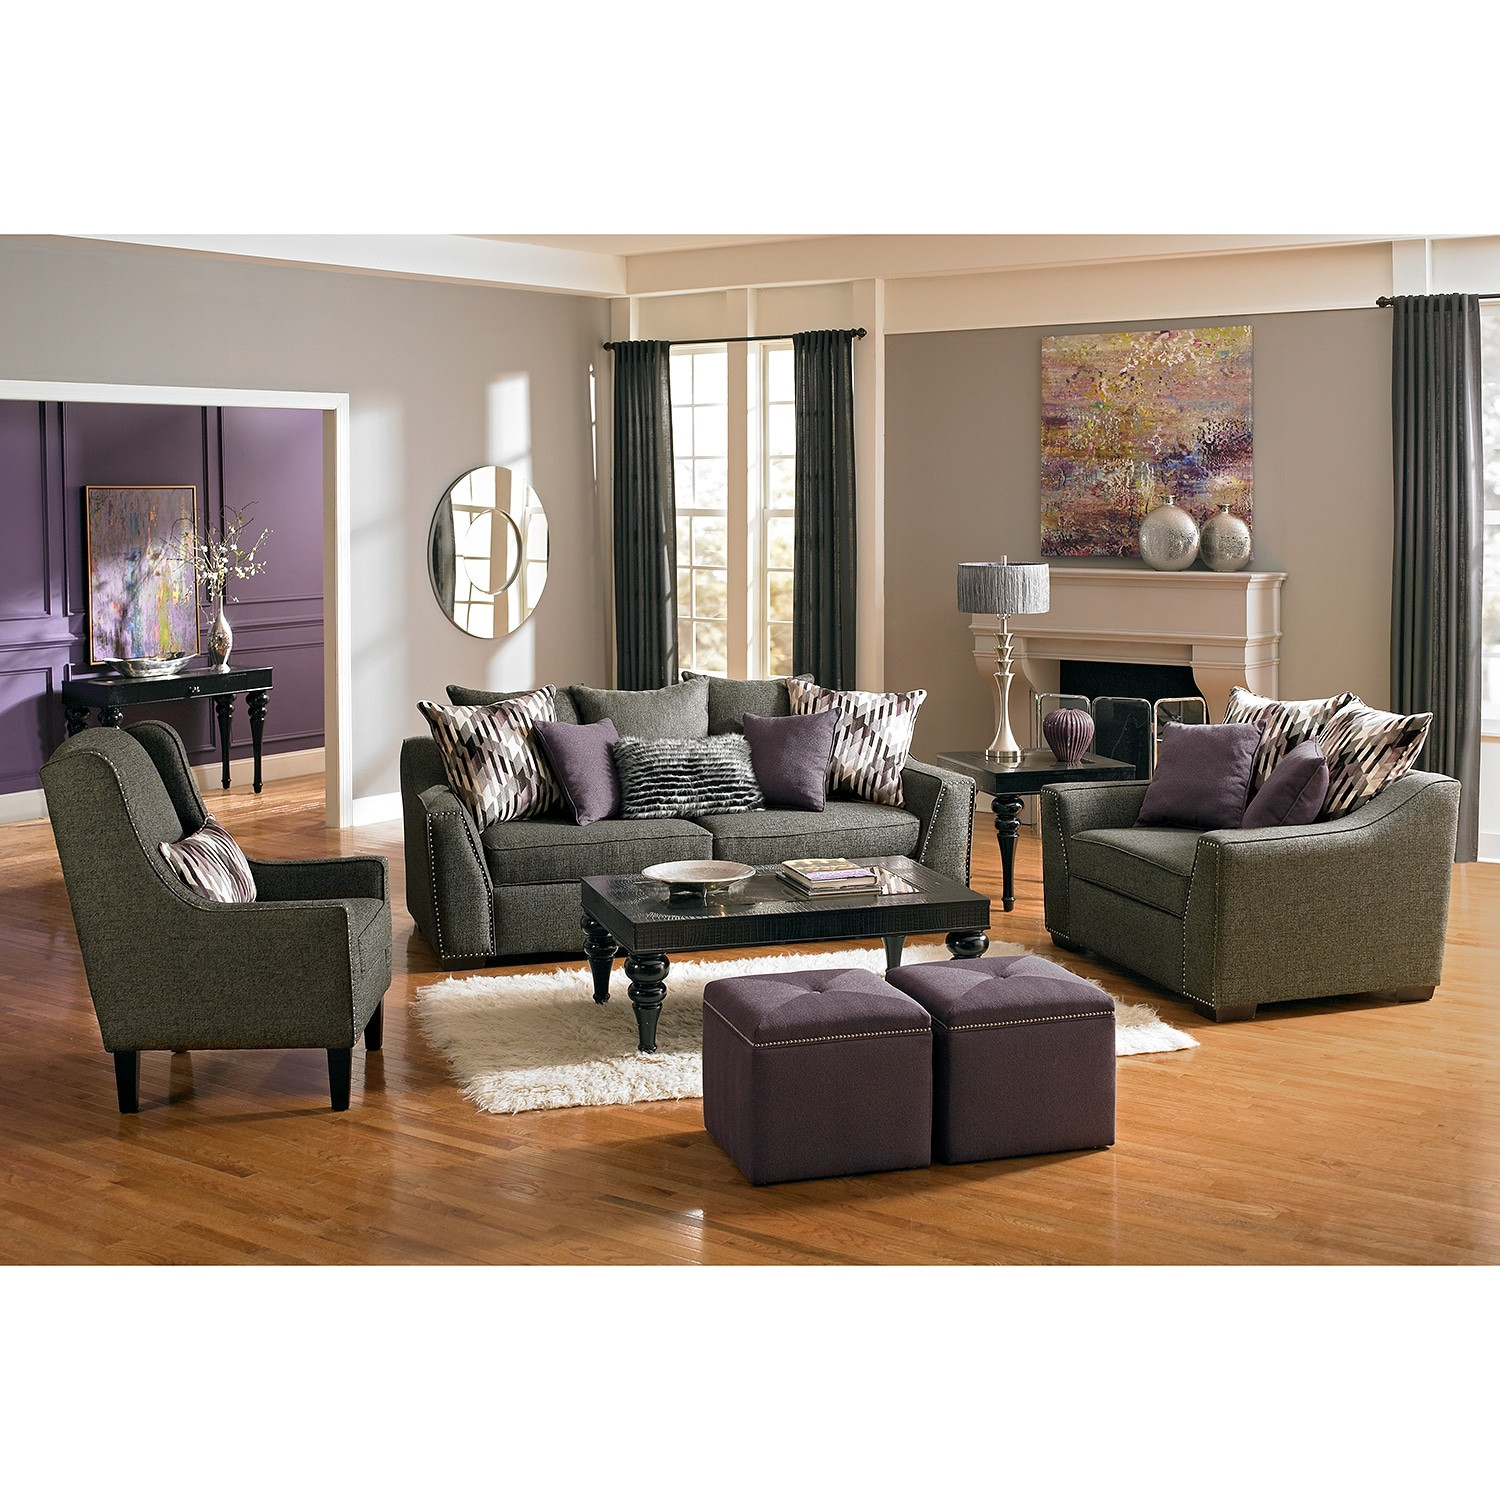 Value City Living Room Tables
 Ritz Sofa Gray